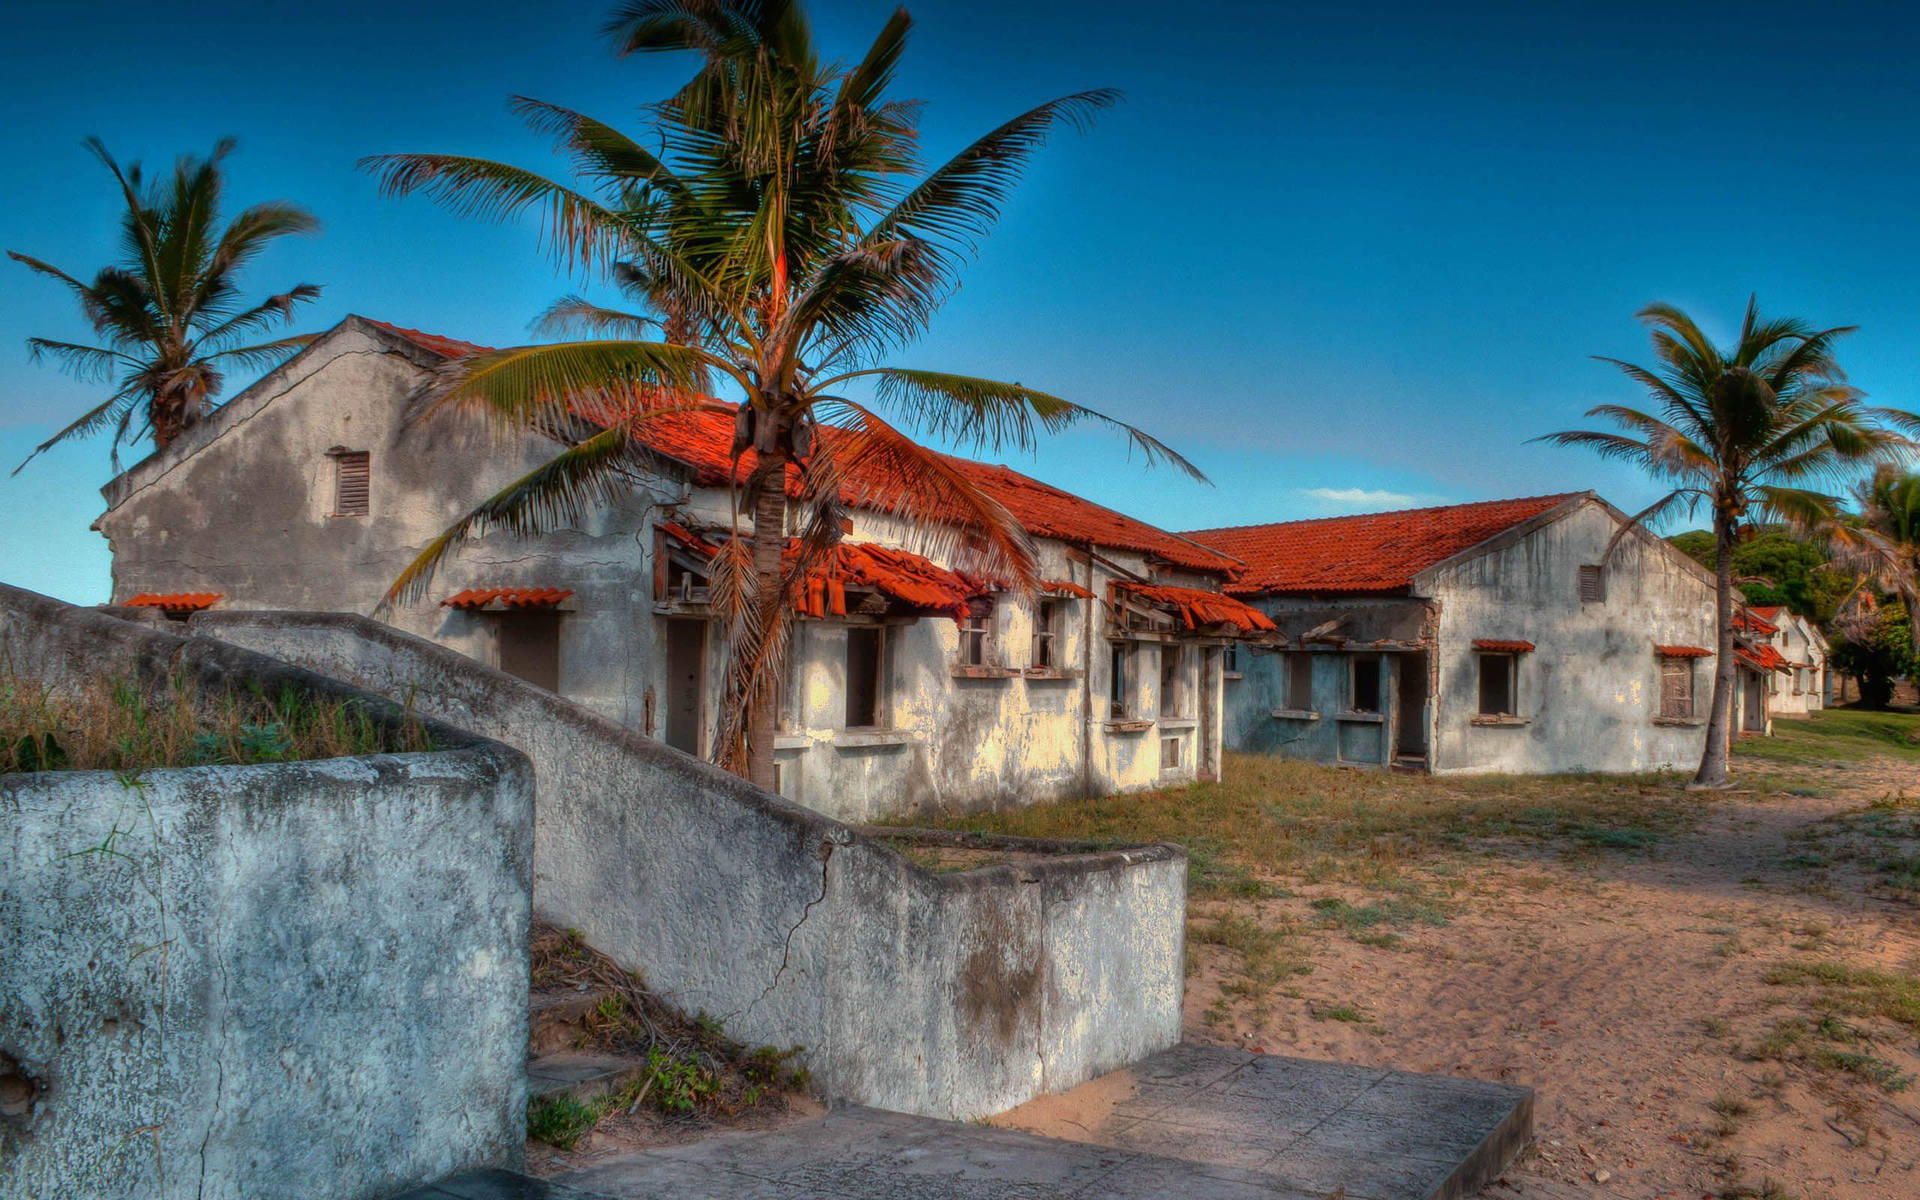 The Shipwreck Lodge Mozambique